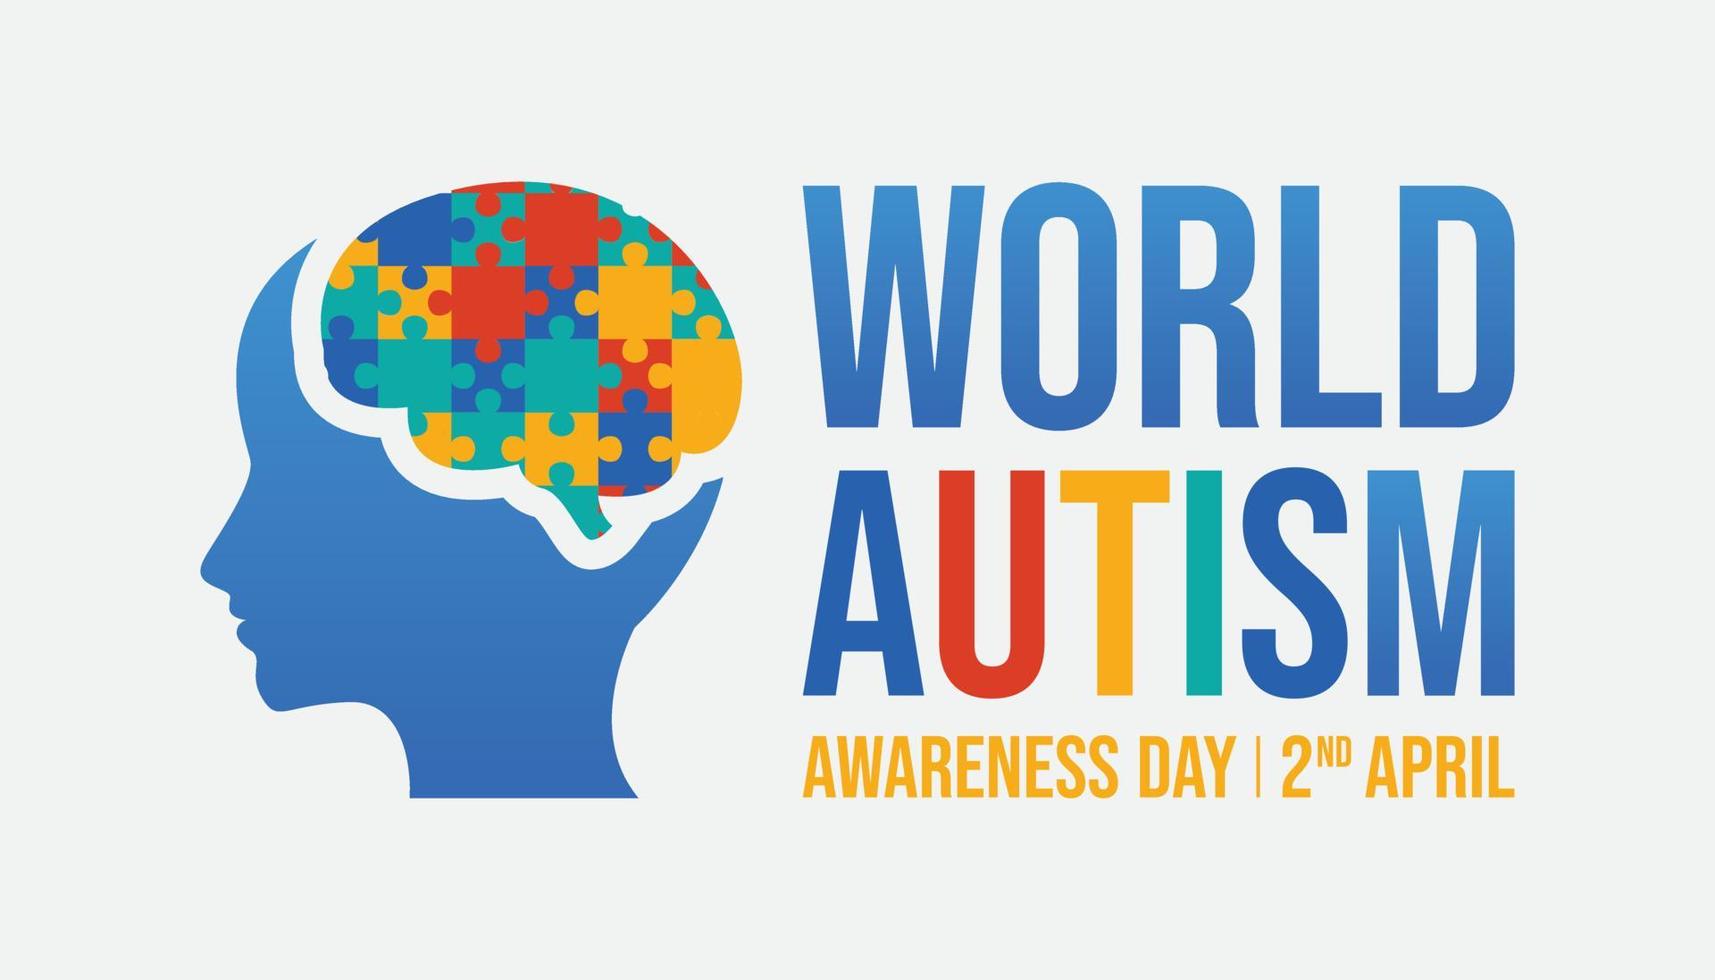 World autism awareness day. vector